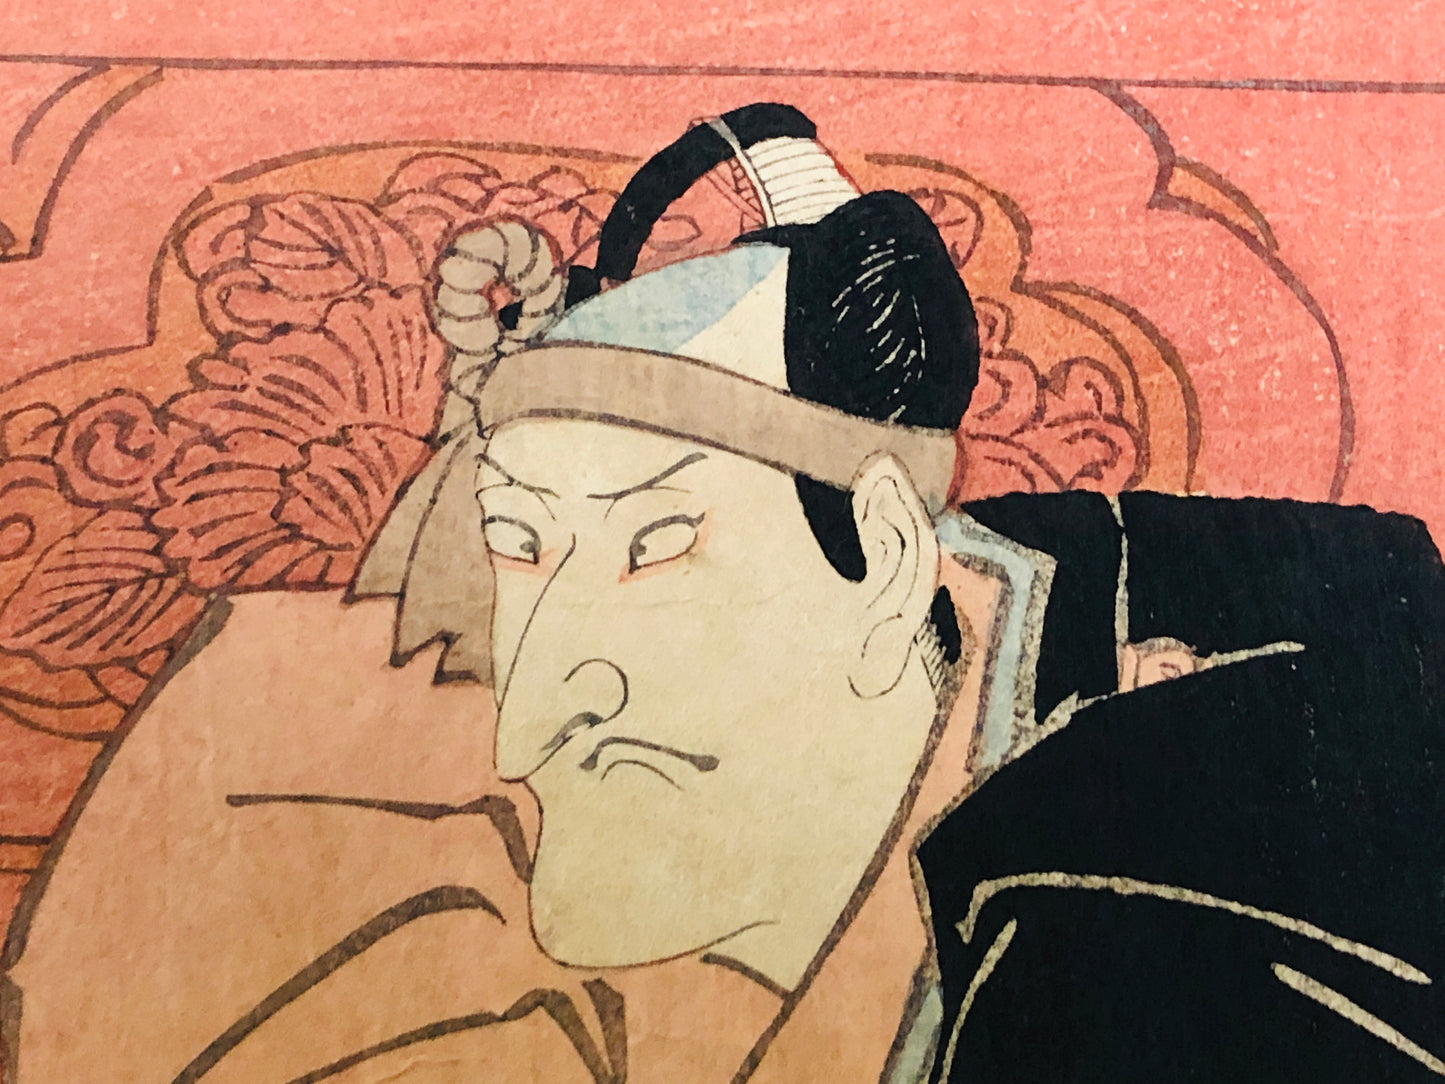 Y6590 [VIDEO] WOODBLOCK PRINT Kunisada Kabuki diptych Japan Ukiyoe antique art vintage